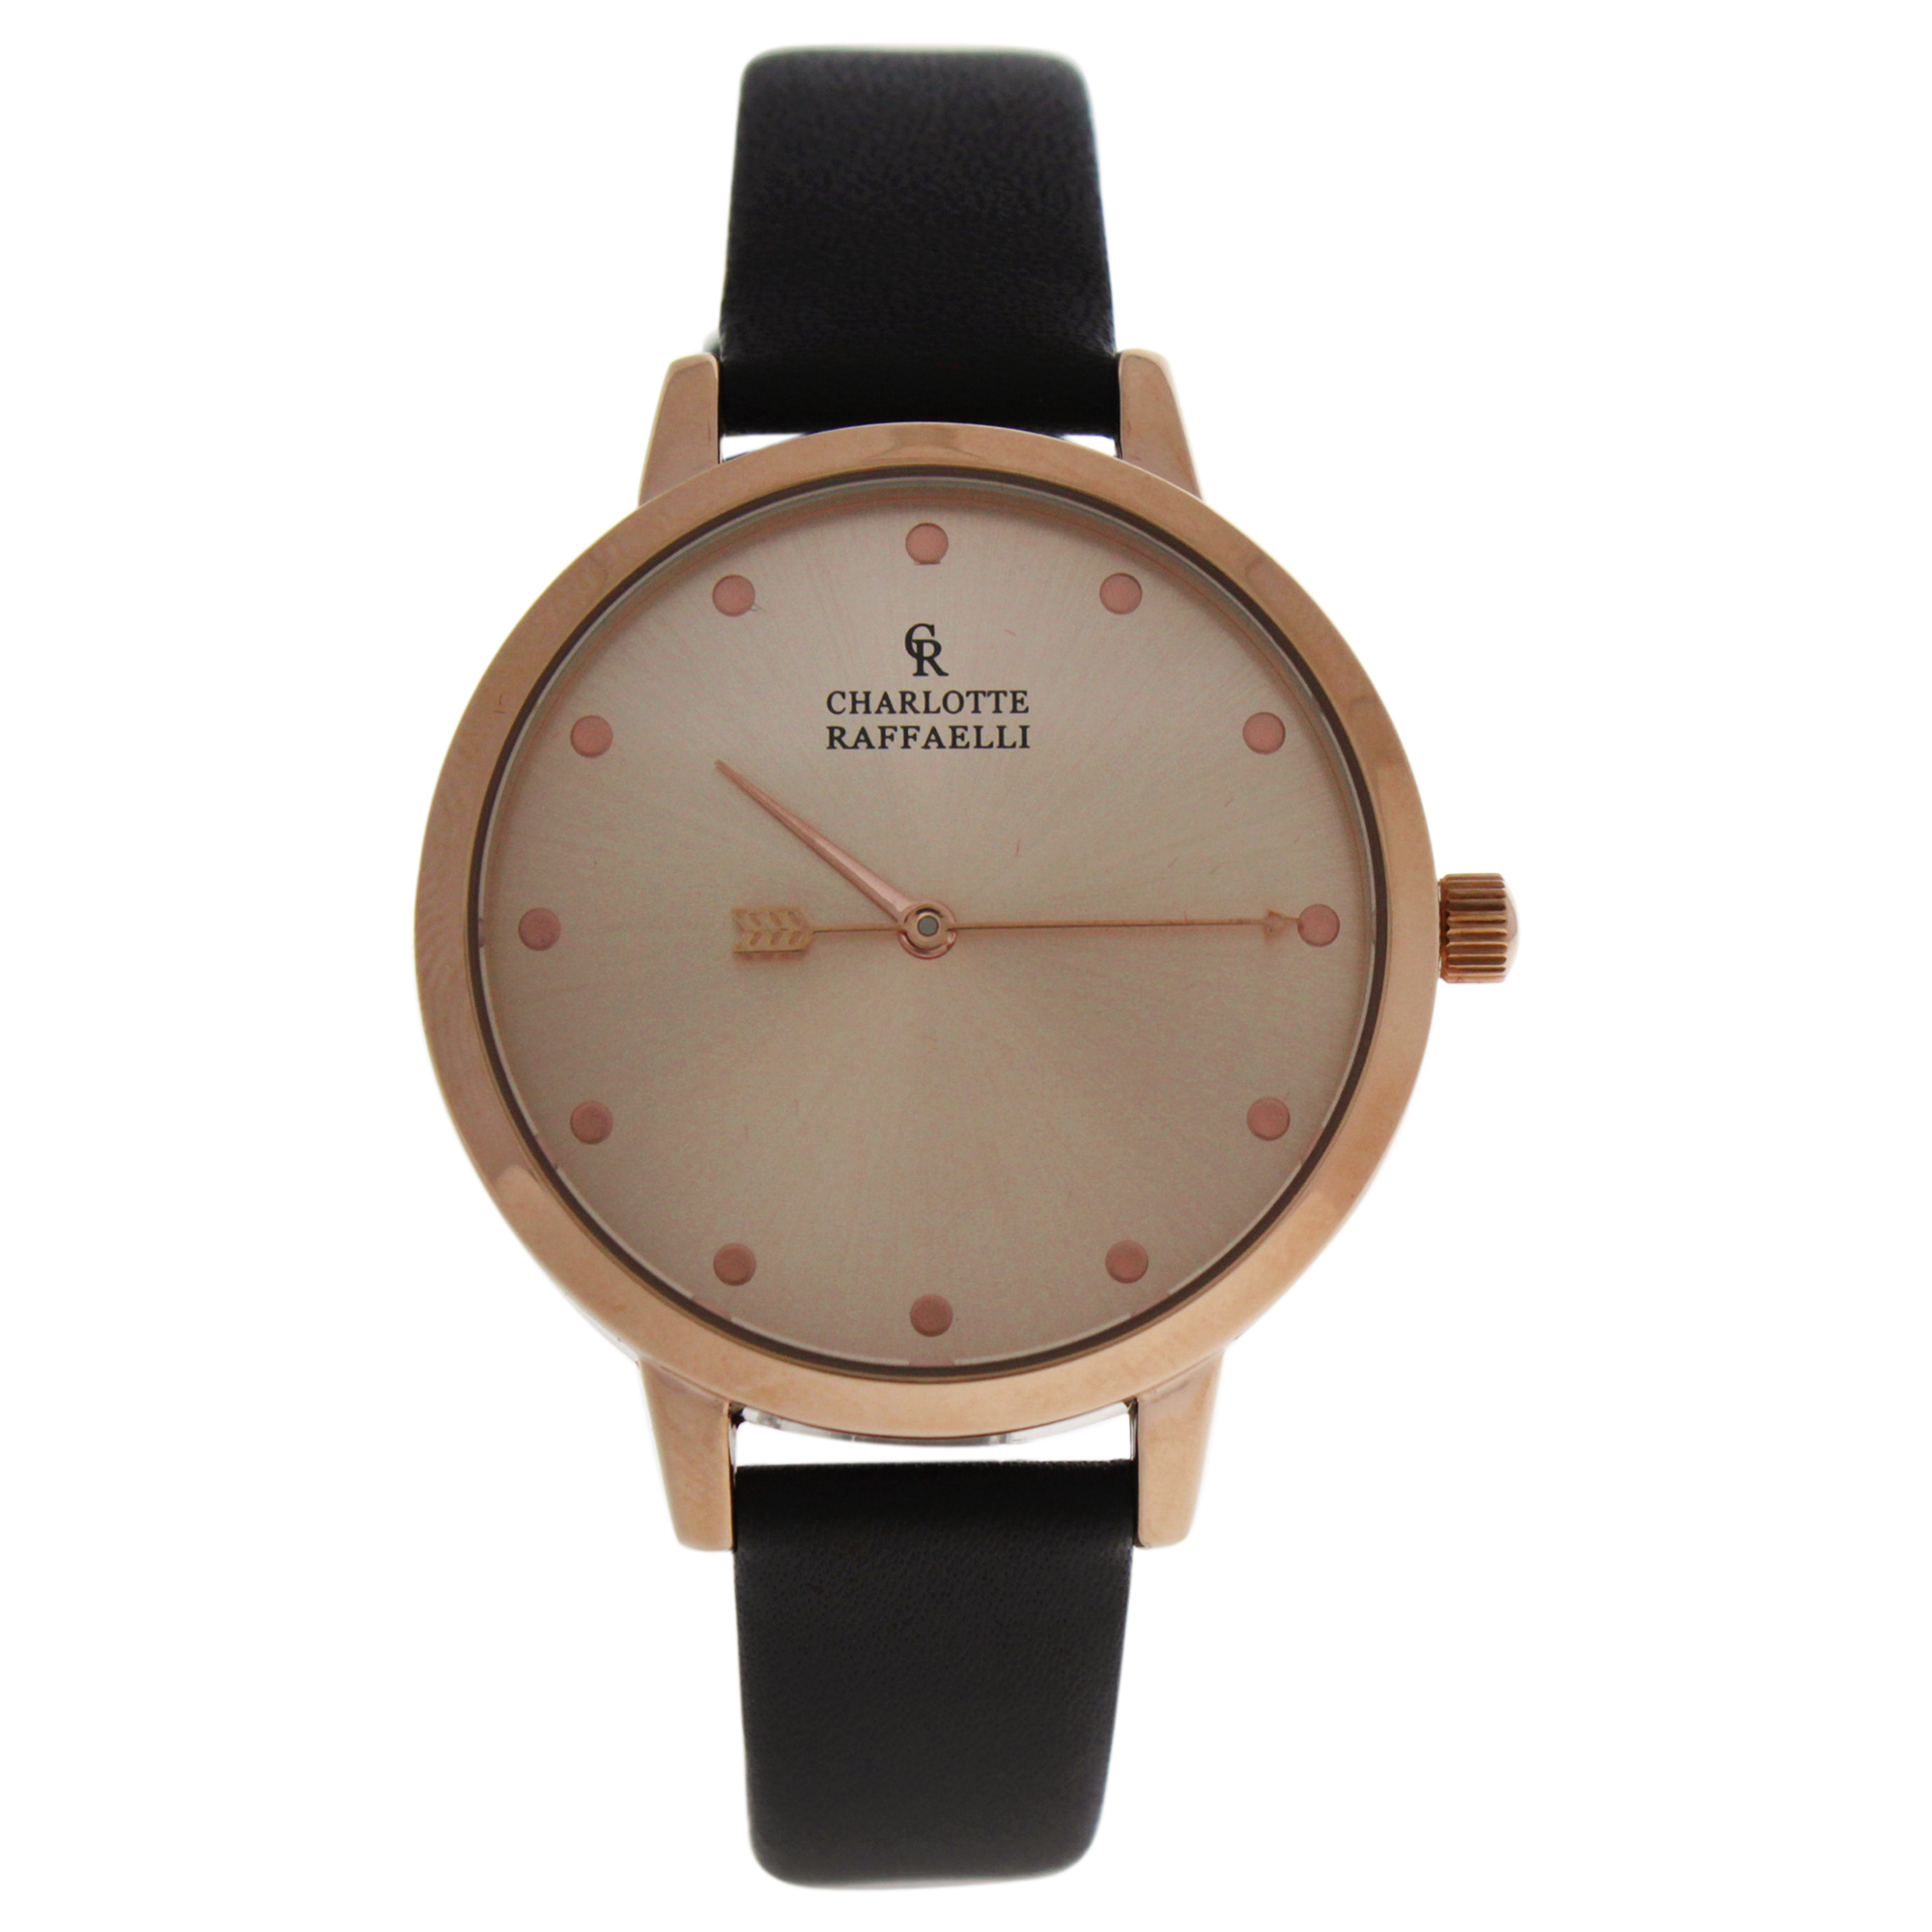 CRB006 La Basic - Rose Gold/Brown Leather Strap Watch by Charlotte Raffaelli for Women - 1 Pc Watch